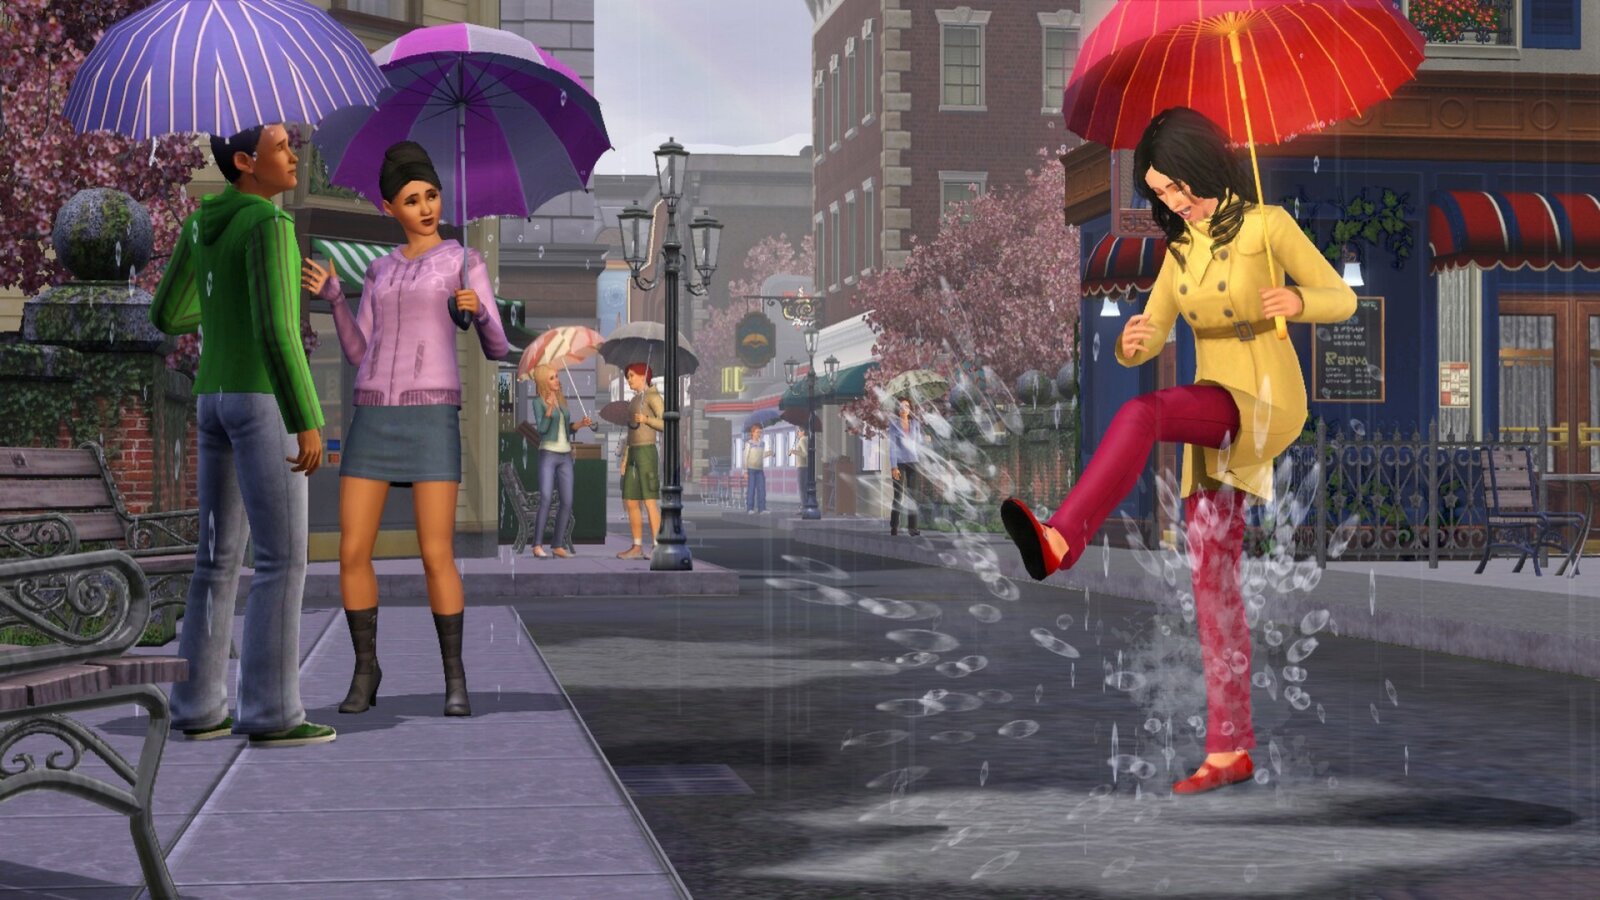 The Sims 3 - Seasons